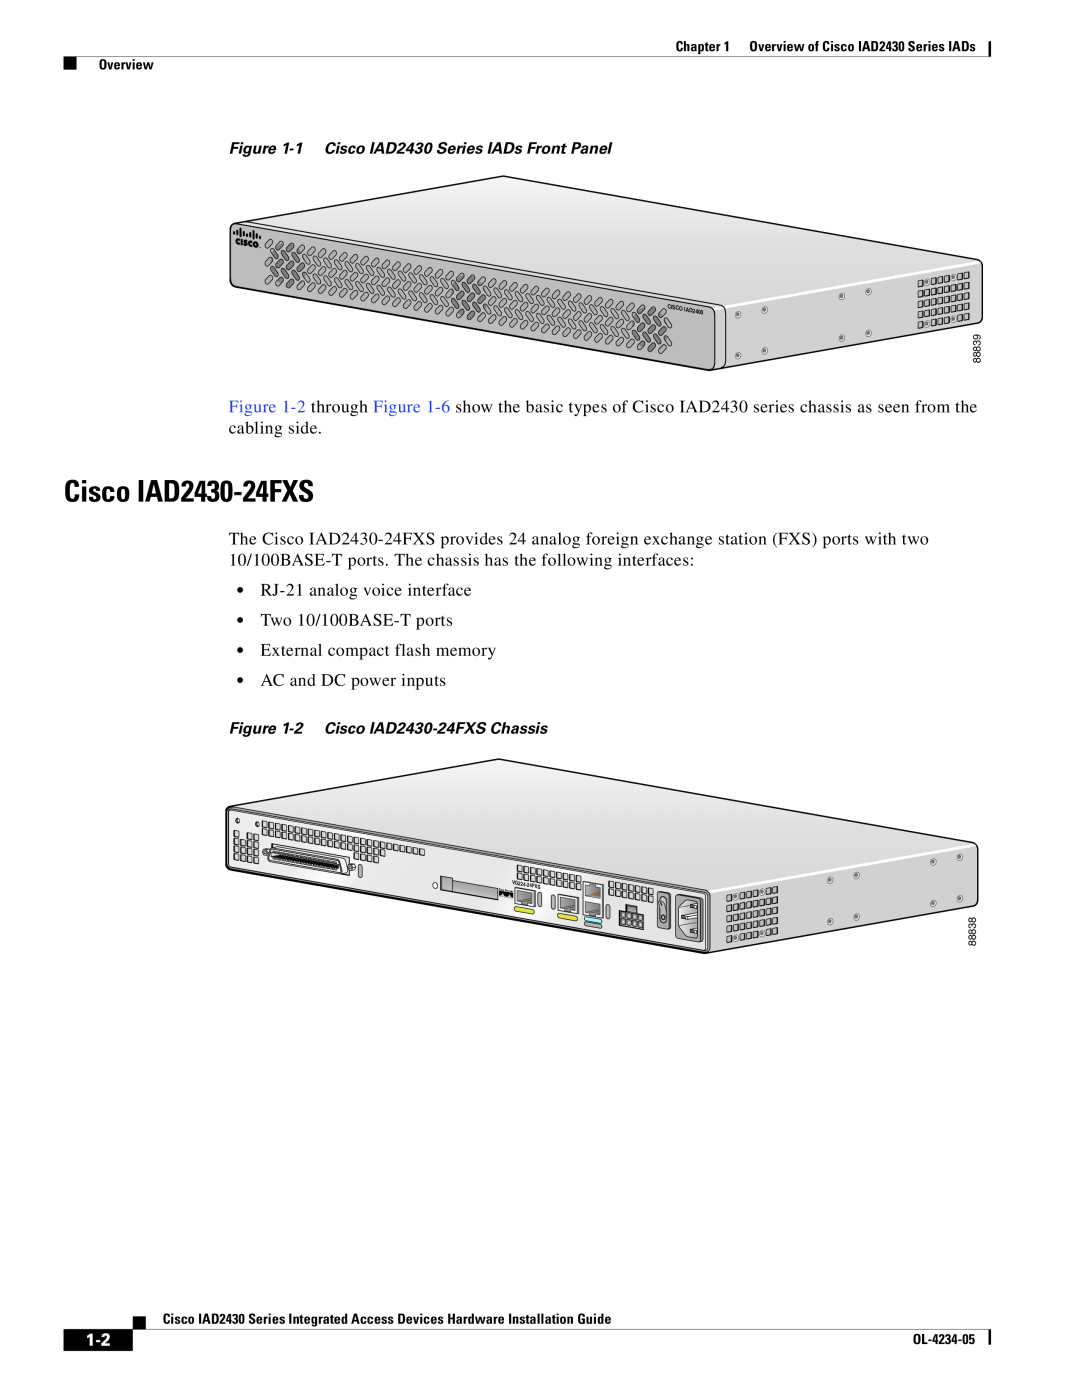 Cisco Systems IAD2430 Series specifications Cisco IAD2430-24FXS 